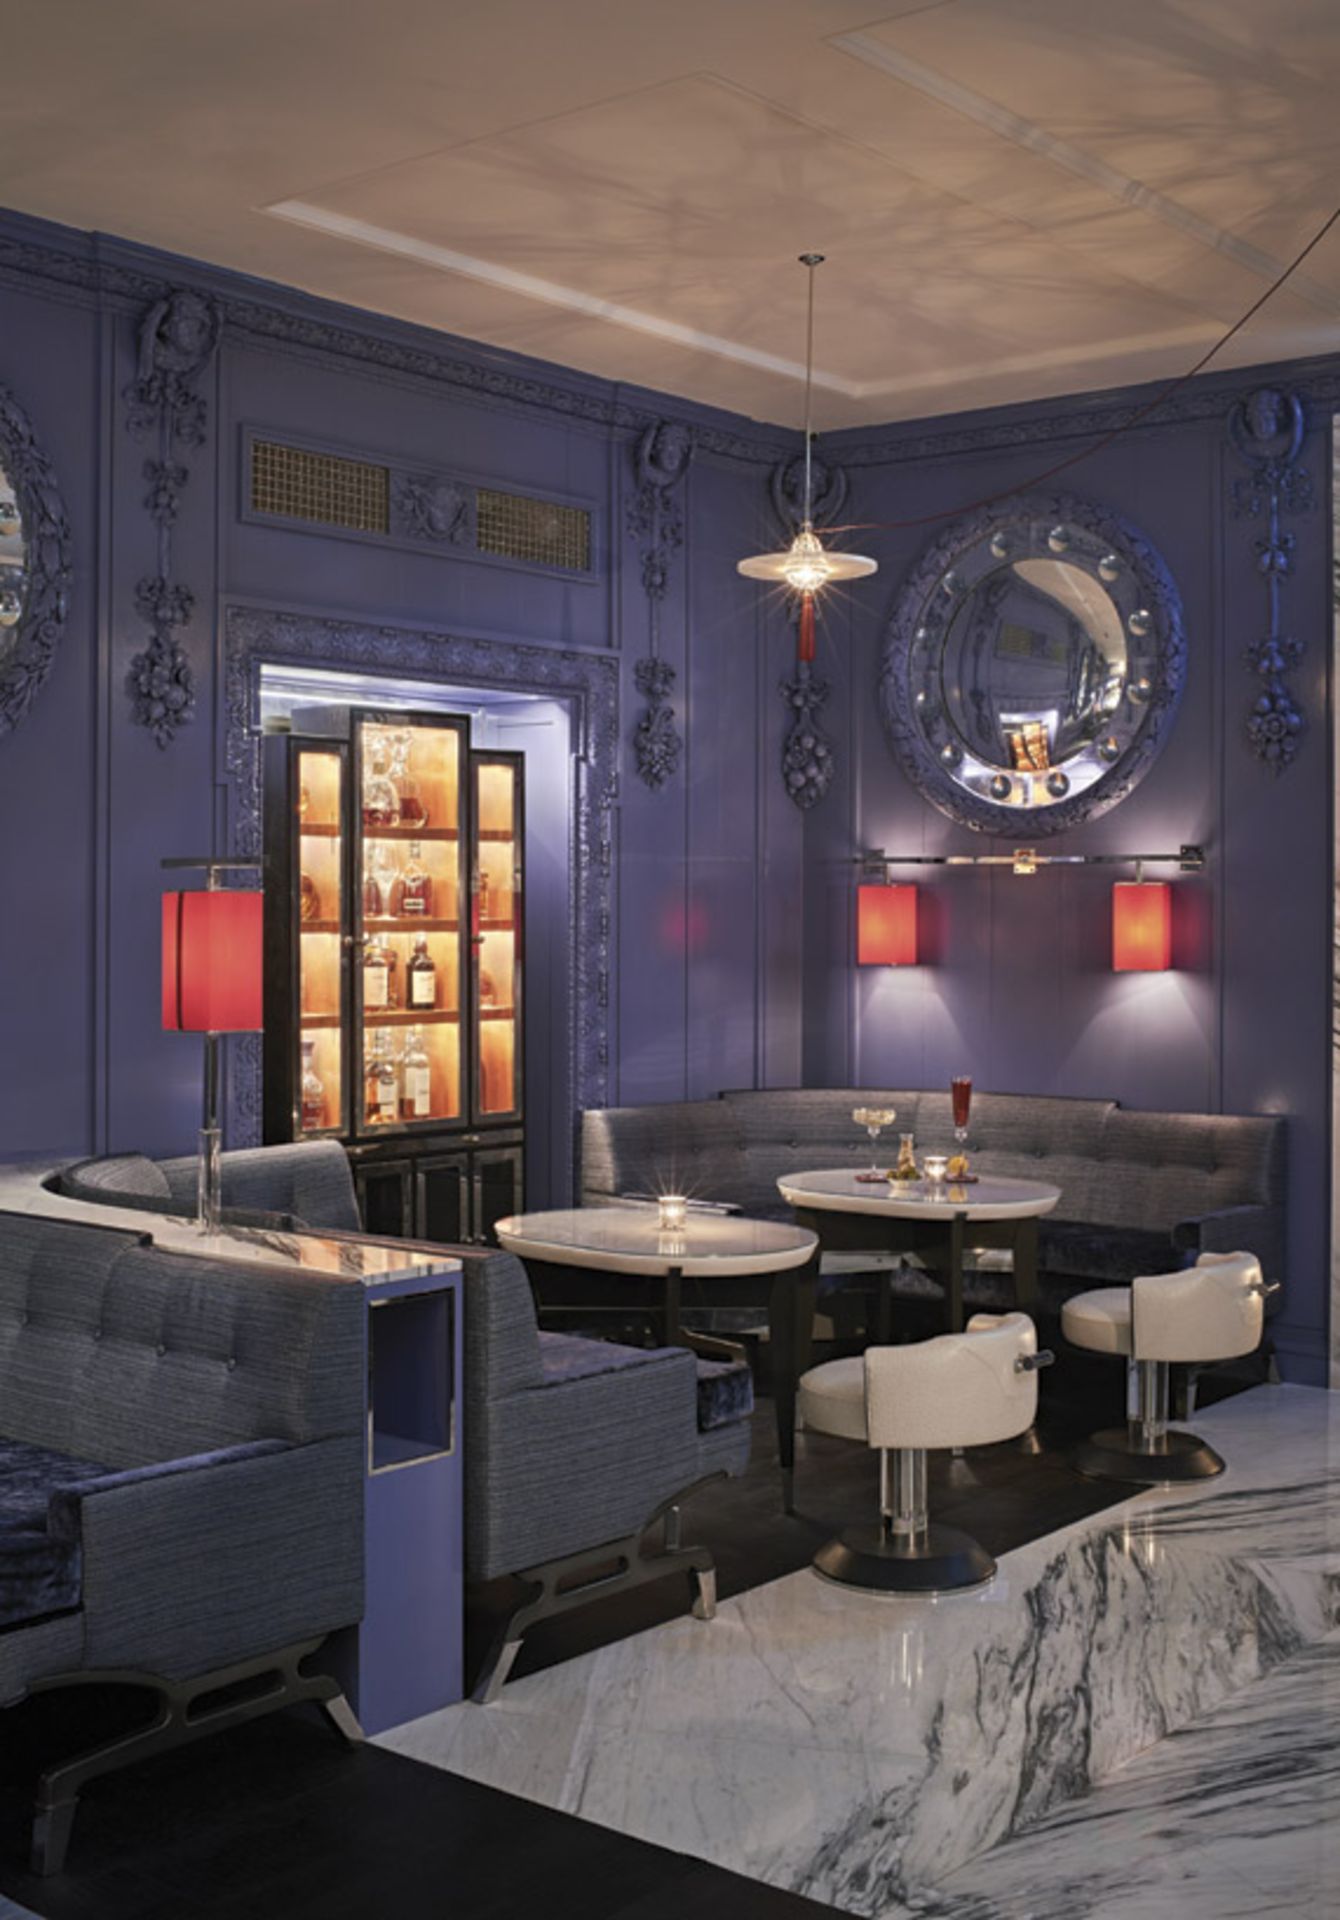 Bespoke Ben Whistler Sofa Made for The Berkeley Blue Bar - Image 11 of 11